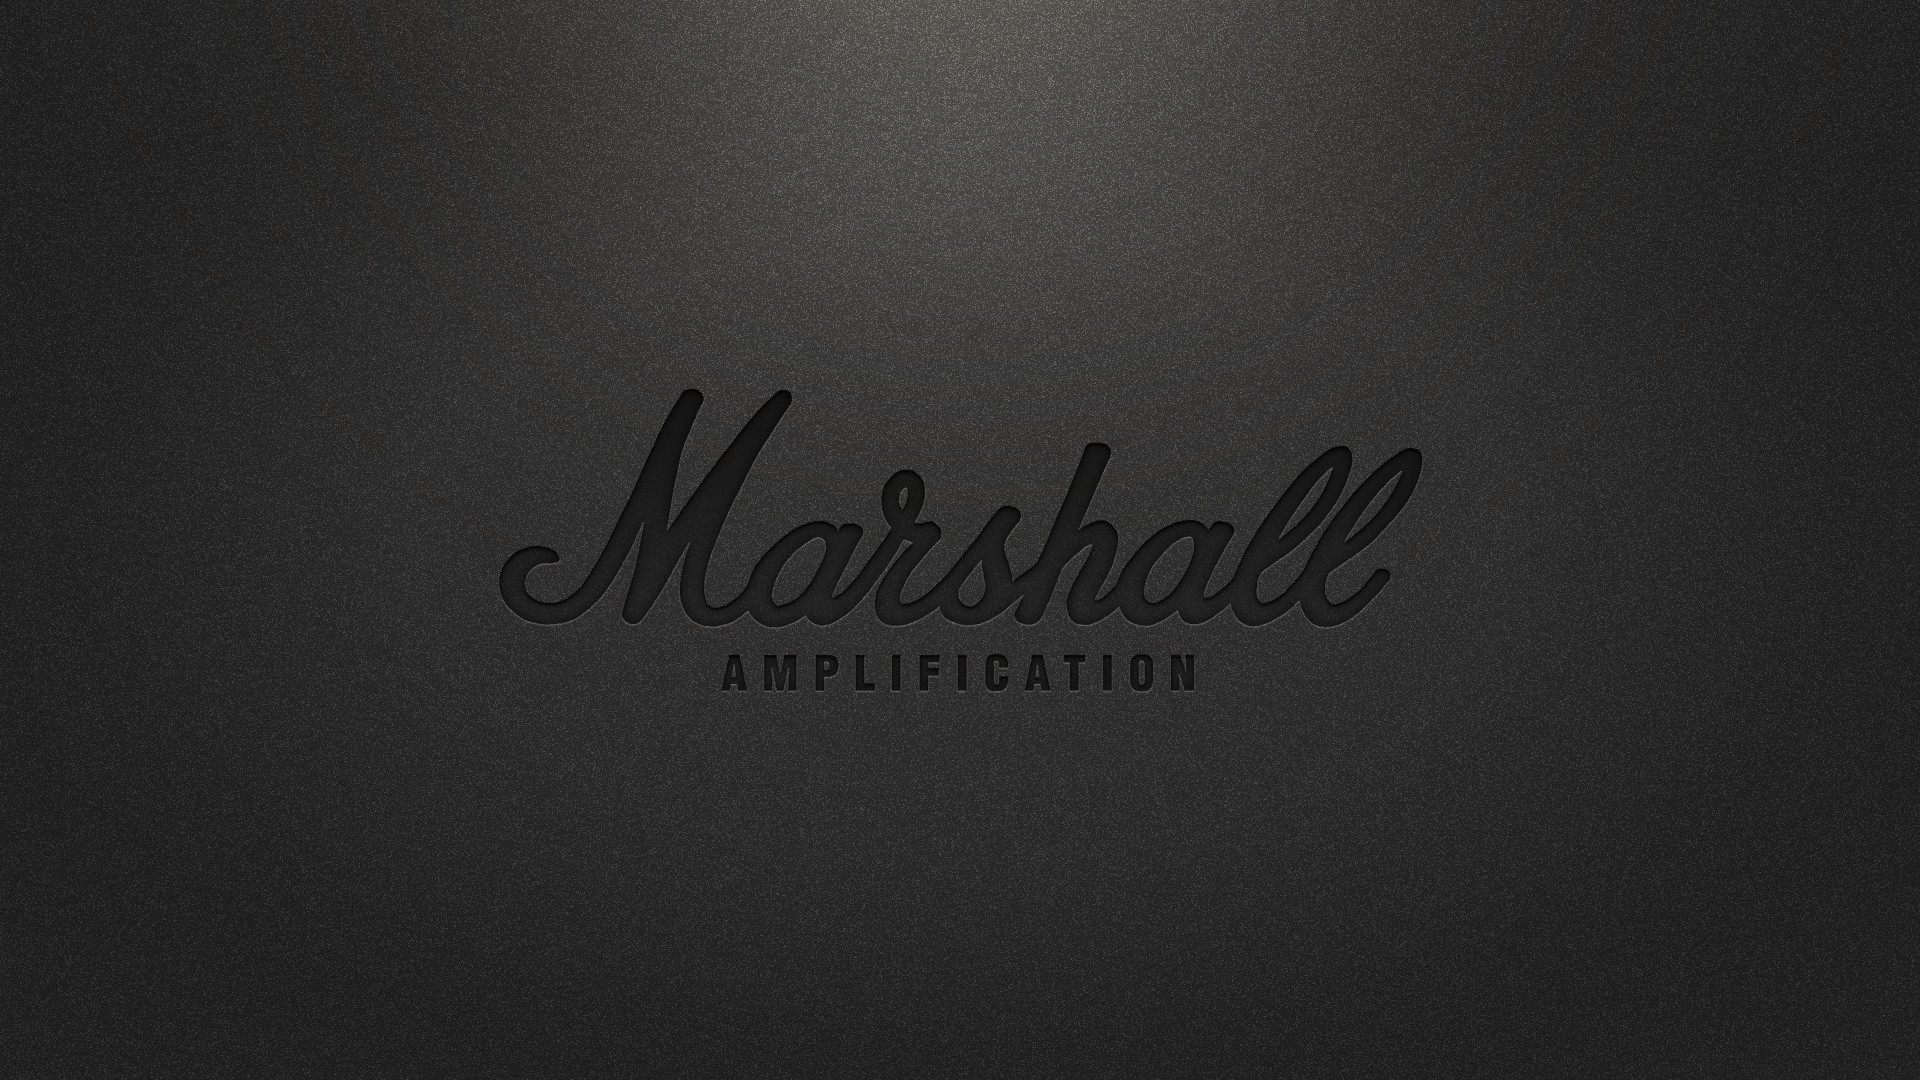 1920x1080 Marshall Amp Wallpaper - WallpaperSafari